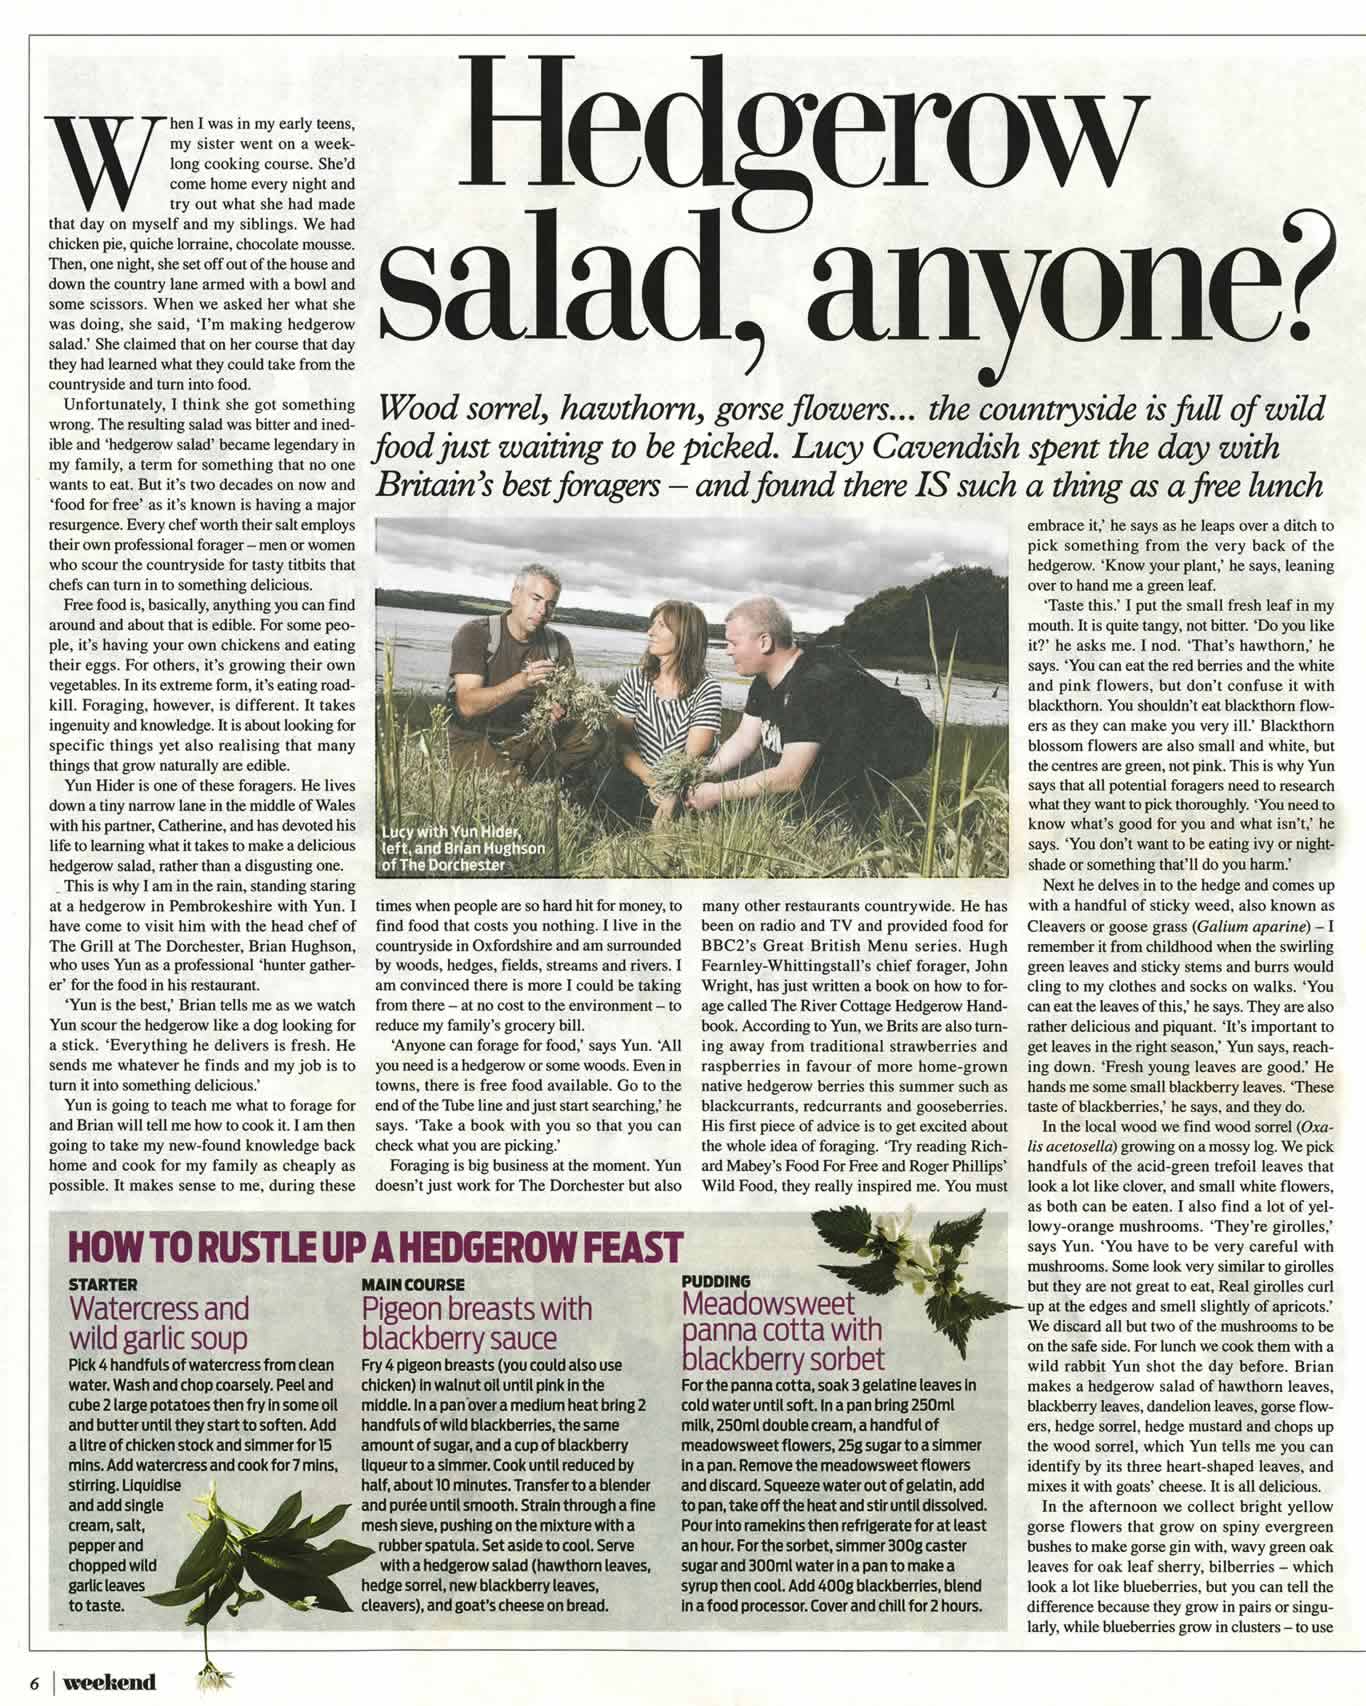 Hedgerow Salad, Anyone?